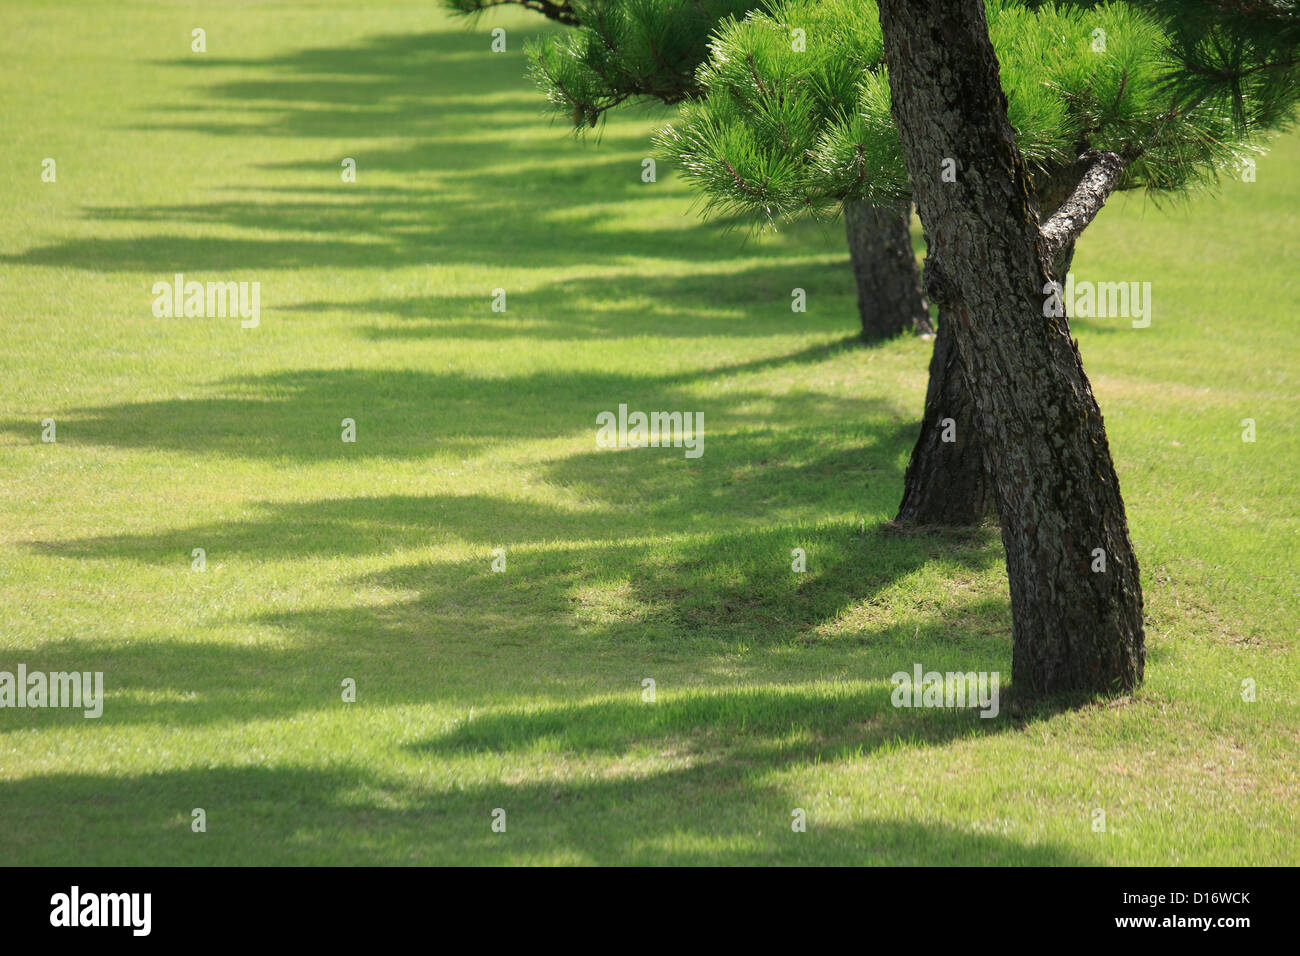 Garden with pine trees, Nara Prefecture Stock Photo